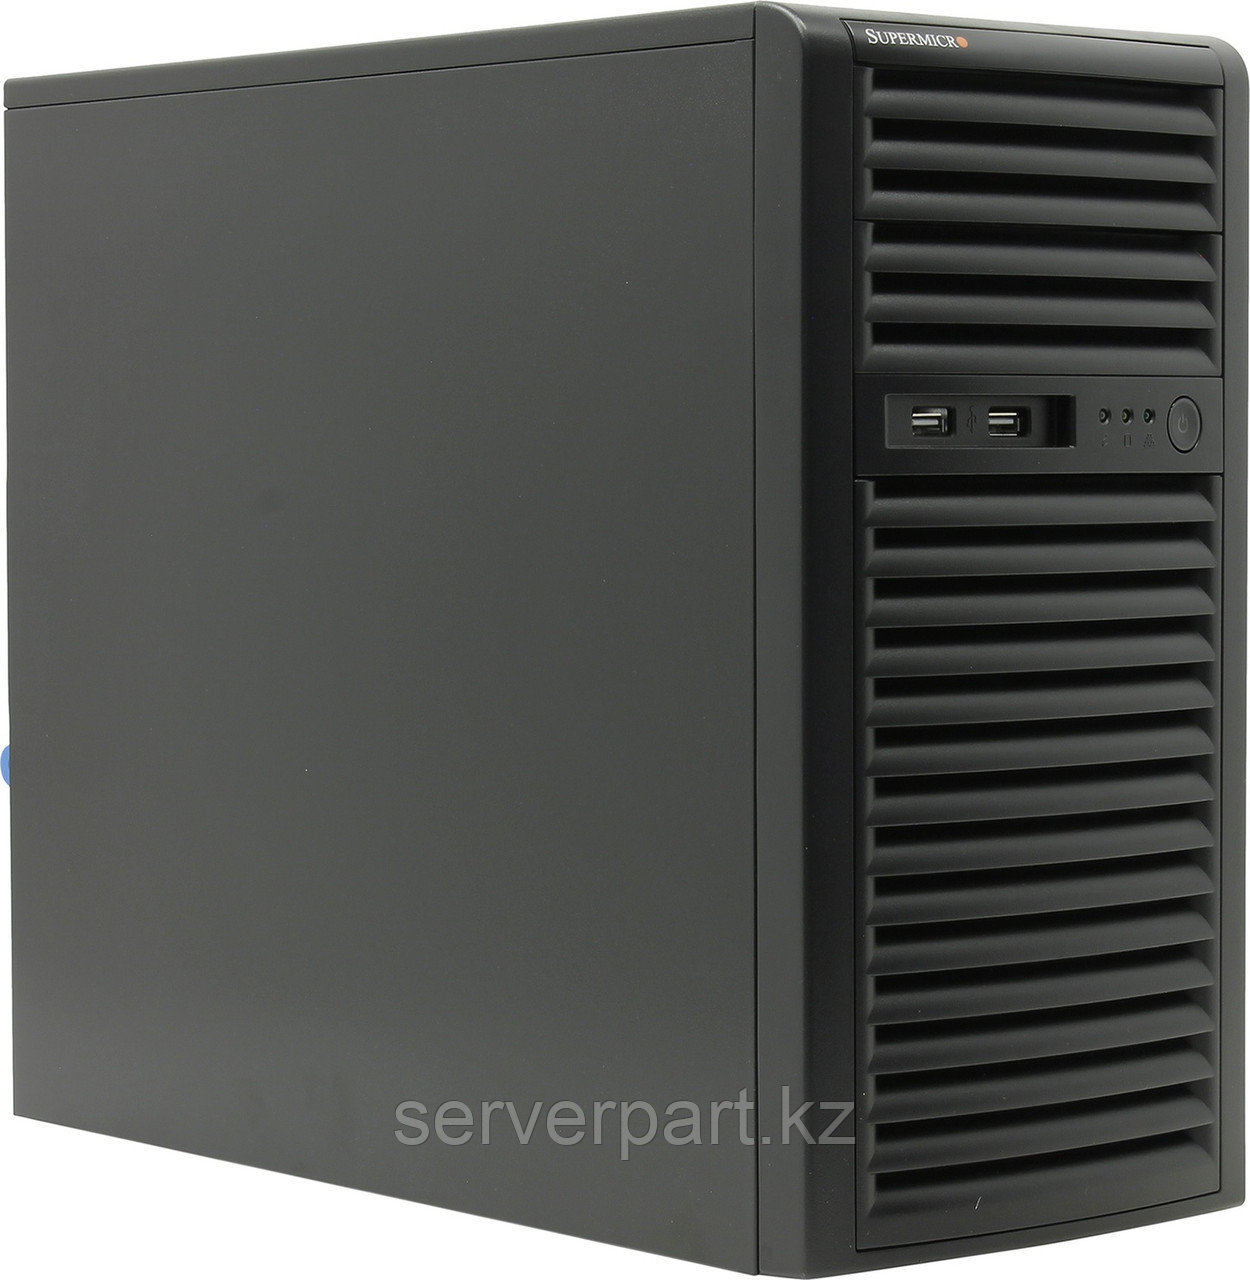 Сервер Supermicro SYS-5039D Tower 4LFF/4-core intel Xeon E3-1220v6 3GHz/24GB EUDIMM/2x480GB SSD RI Hyb